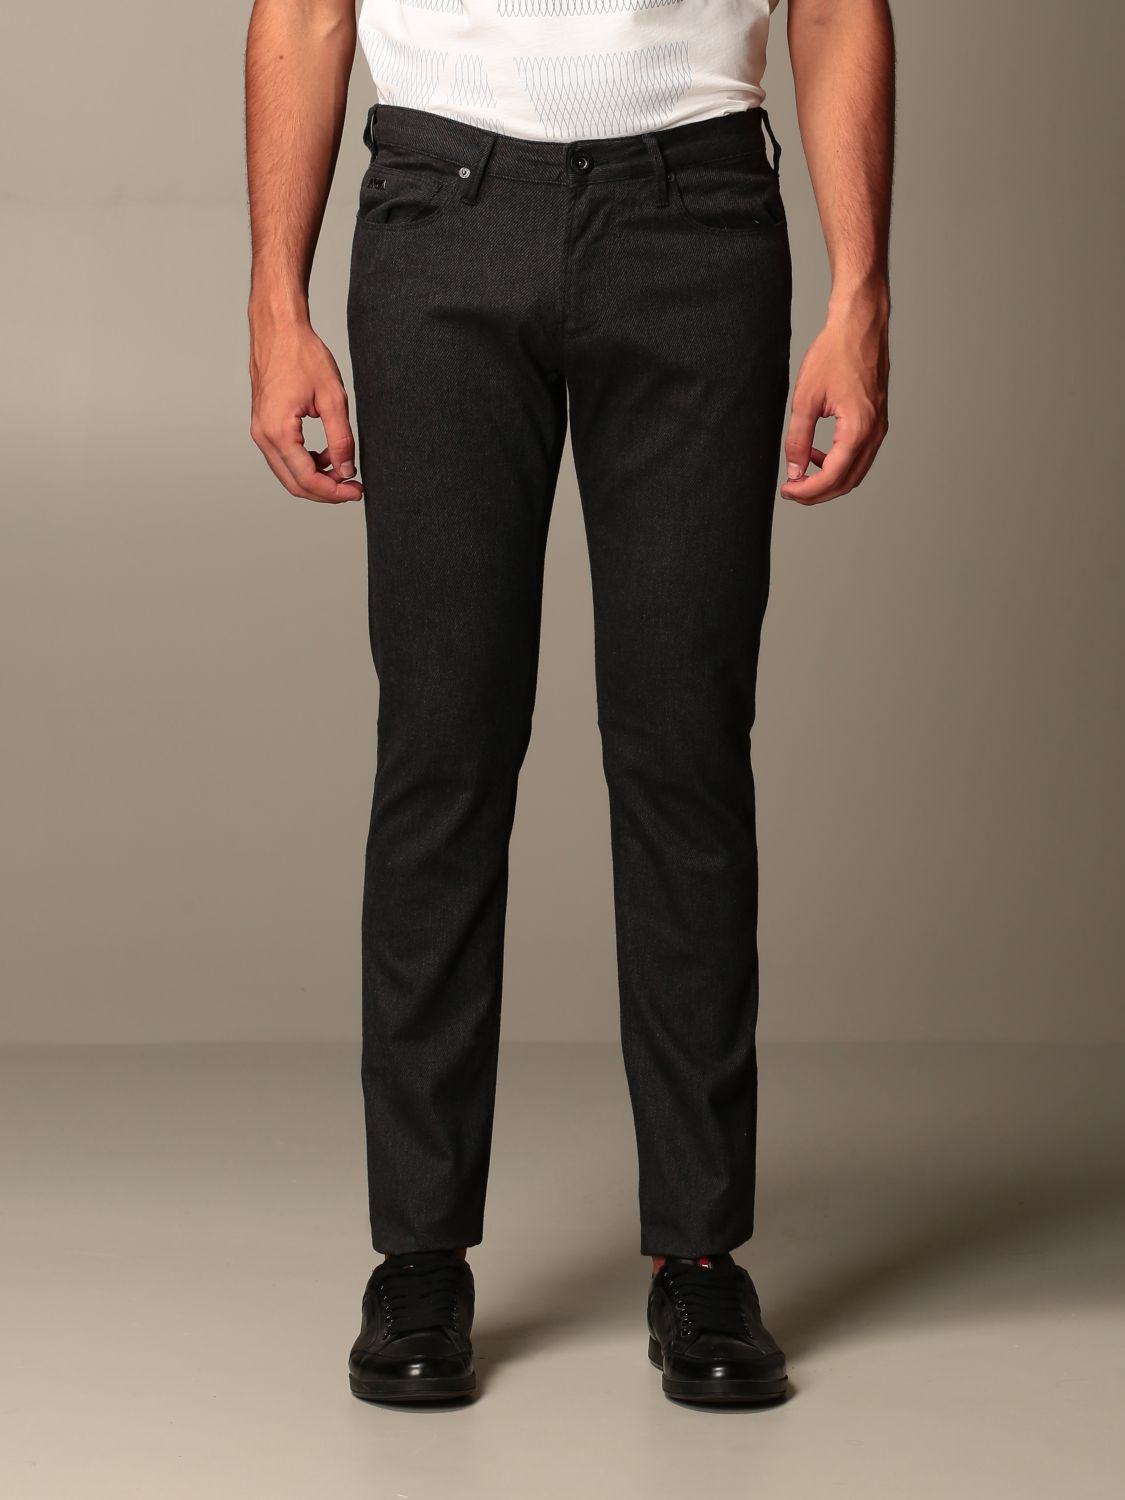 ARMANI 3ATMENTS Skinny Jeans Black Denim Cotton Men's Pants Size 32 |  eBay